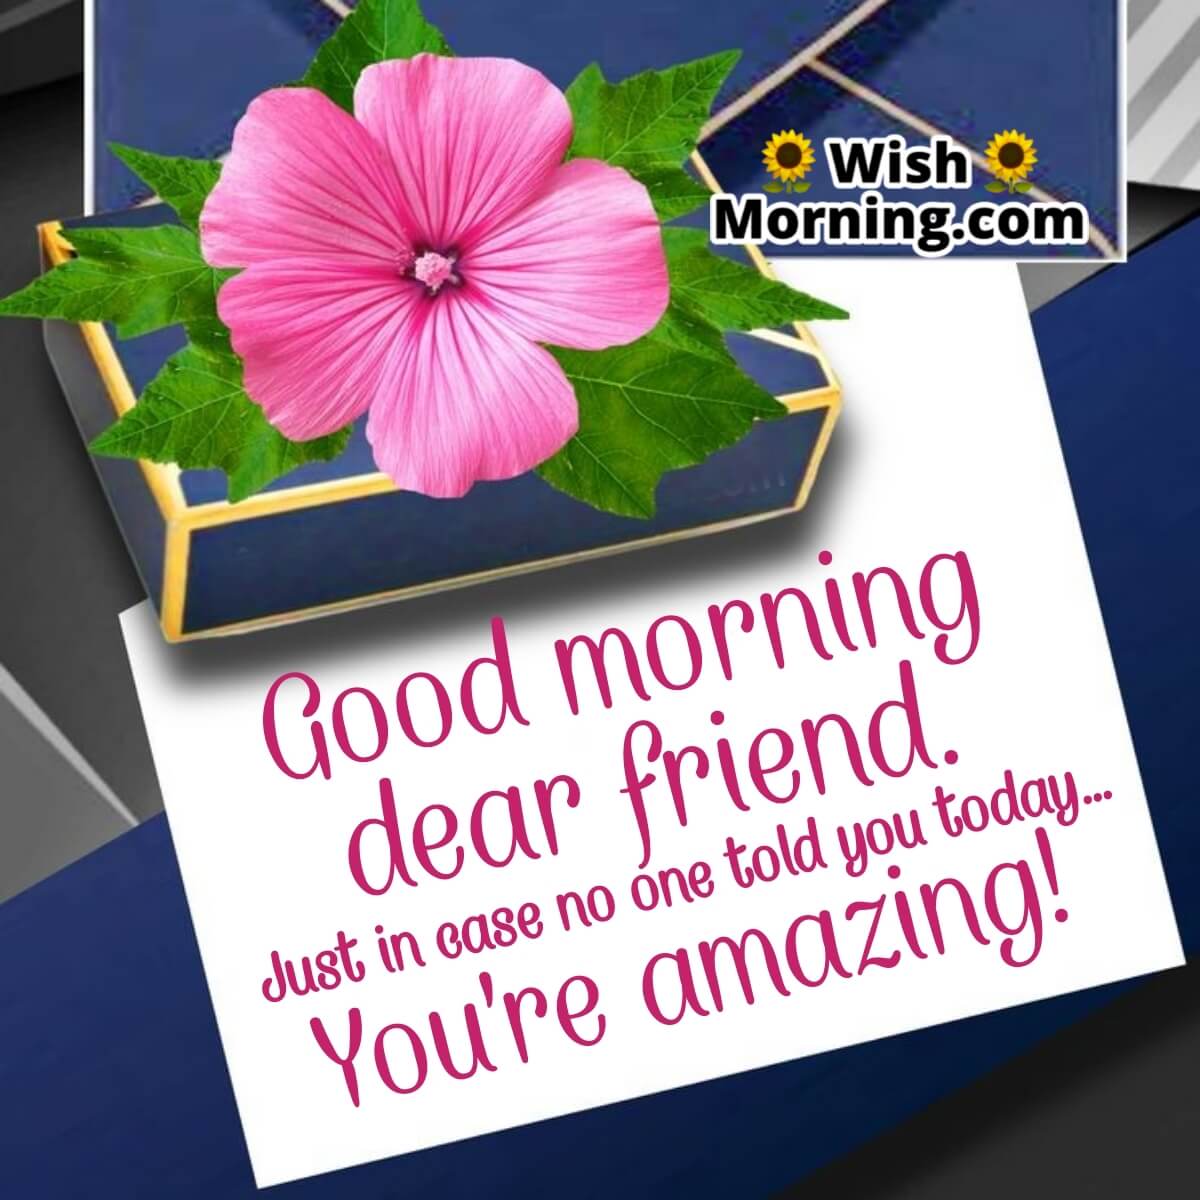 Good Morning Dear Friend You’re Amazing!